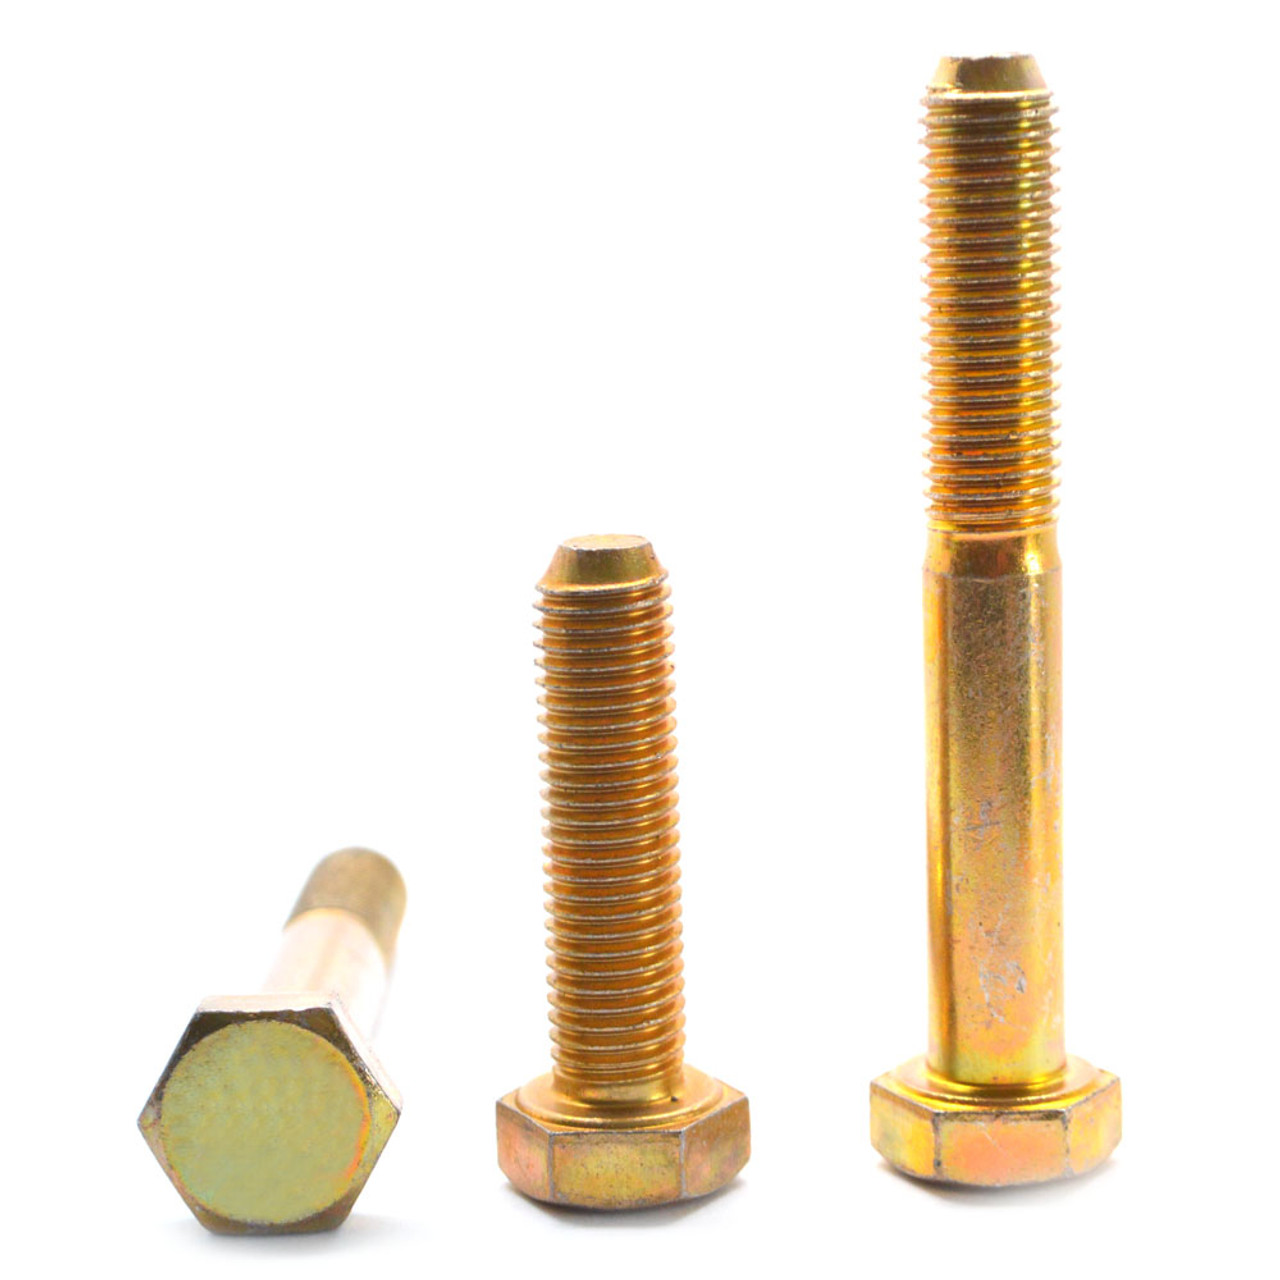 9/16-12 x 3 3/4 Coarse Thread Grade 8 Hex Cap Screw (Bolt) Alloy Steel Yellow Zinc Plated